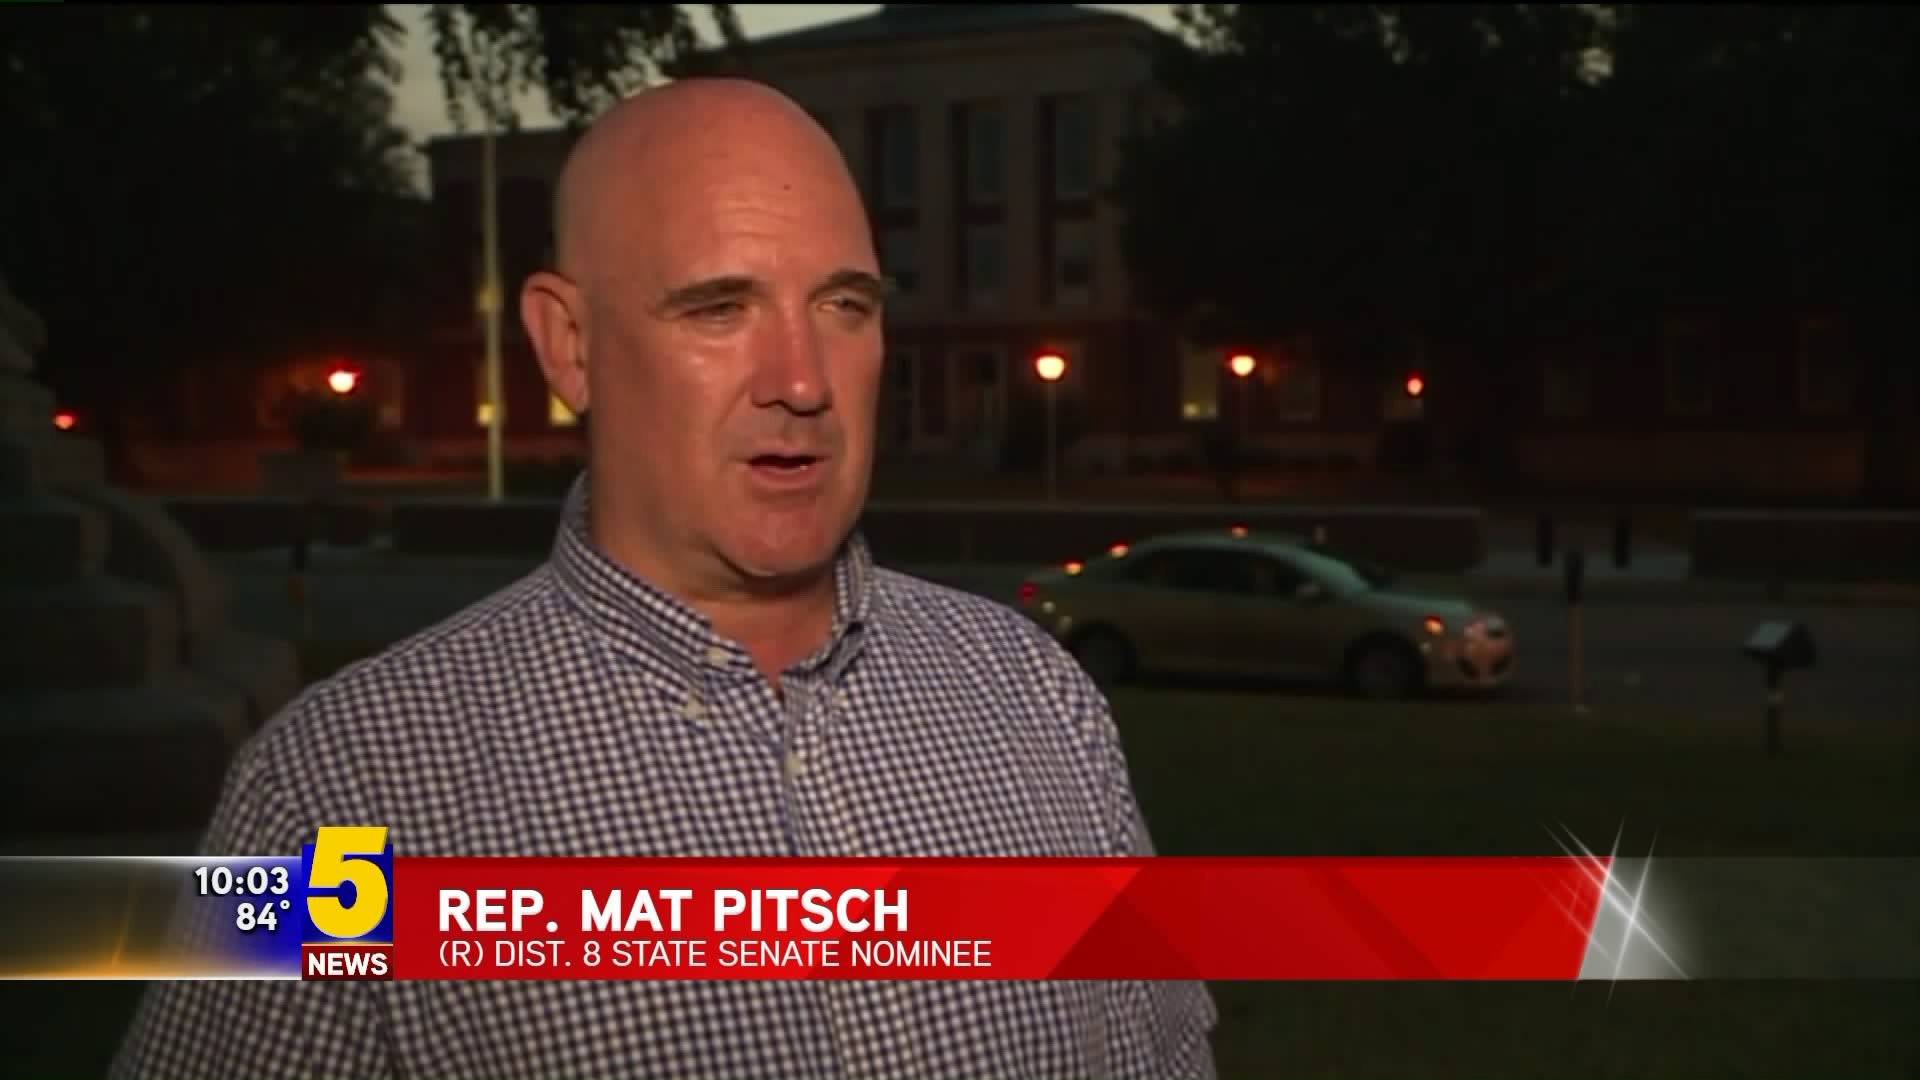 Mat Pitsch Wins District 8 State Senate Seat